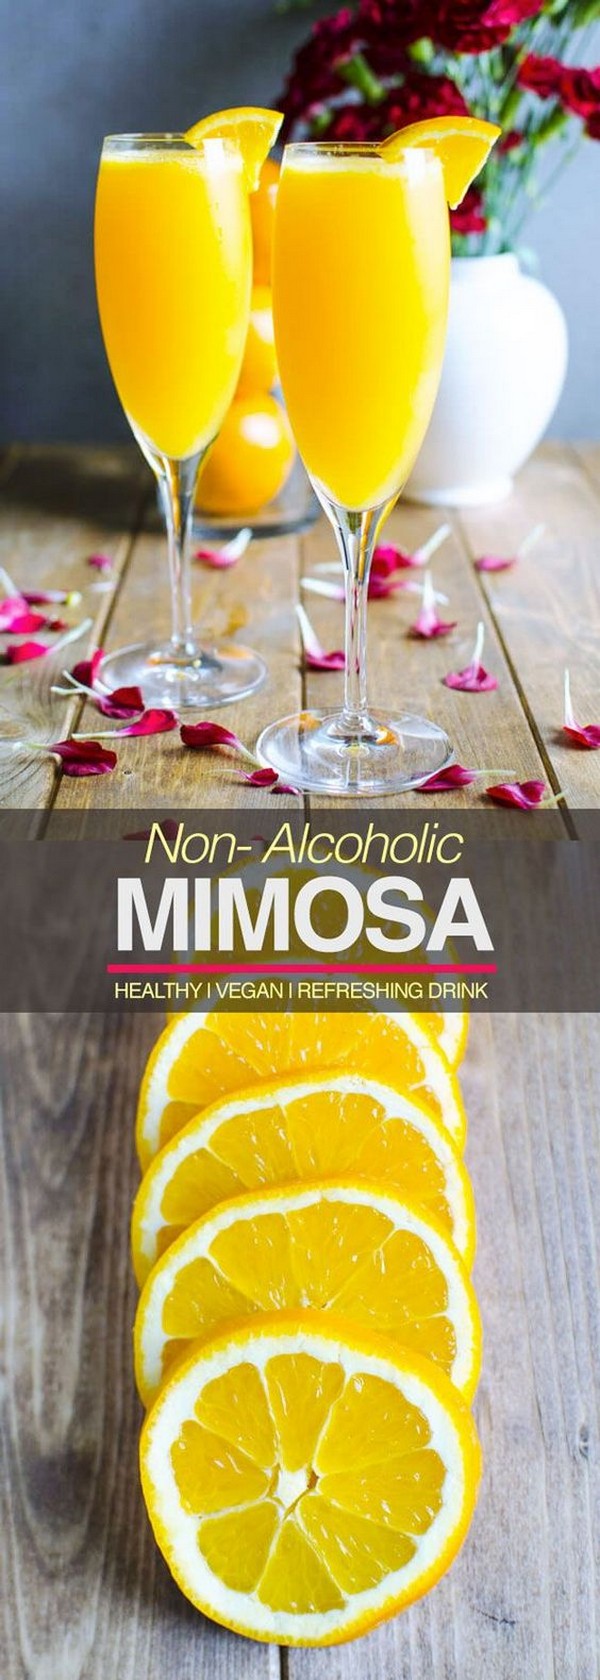 Non-Alcoholic Apple Cider Mimosa